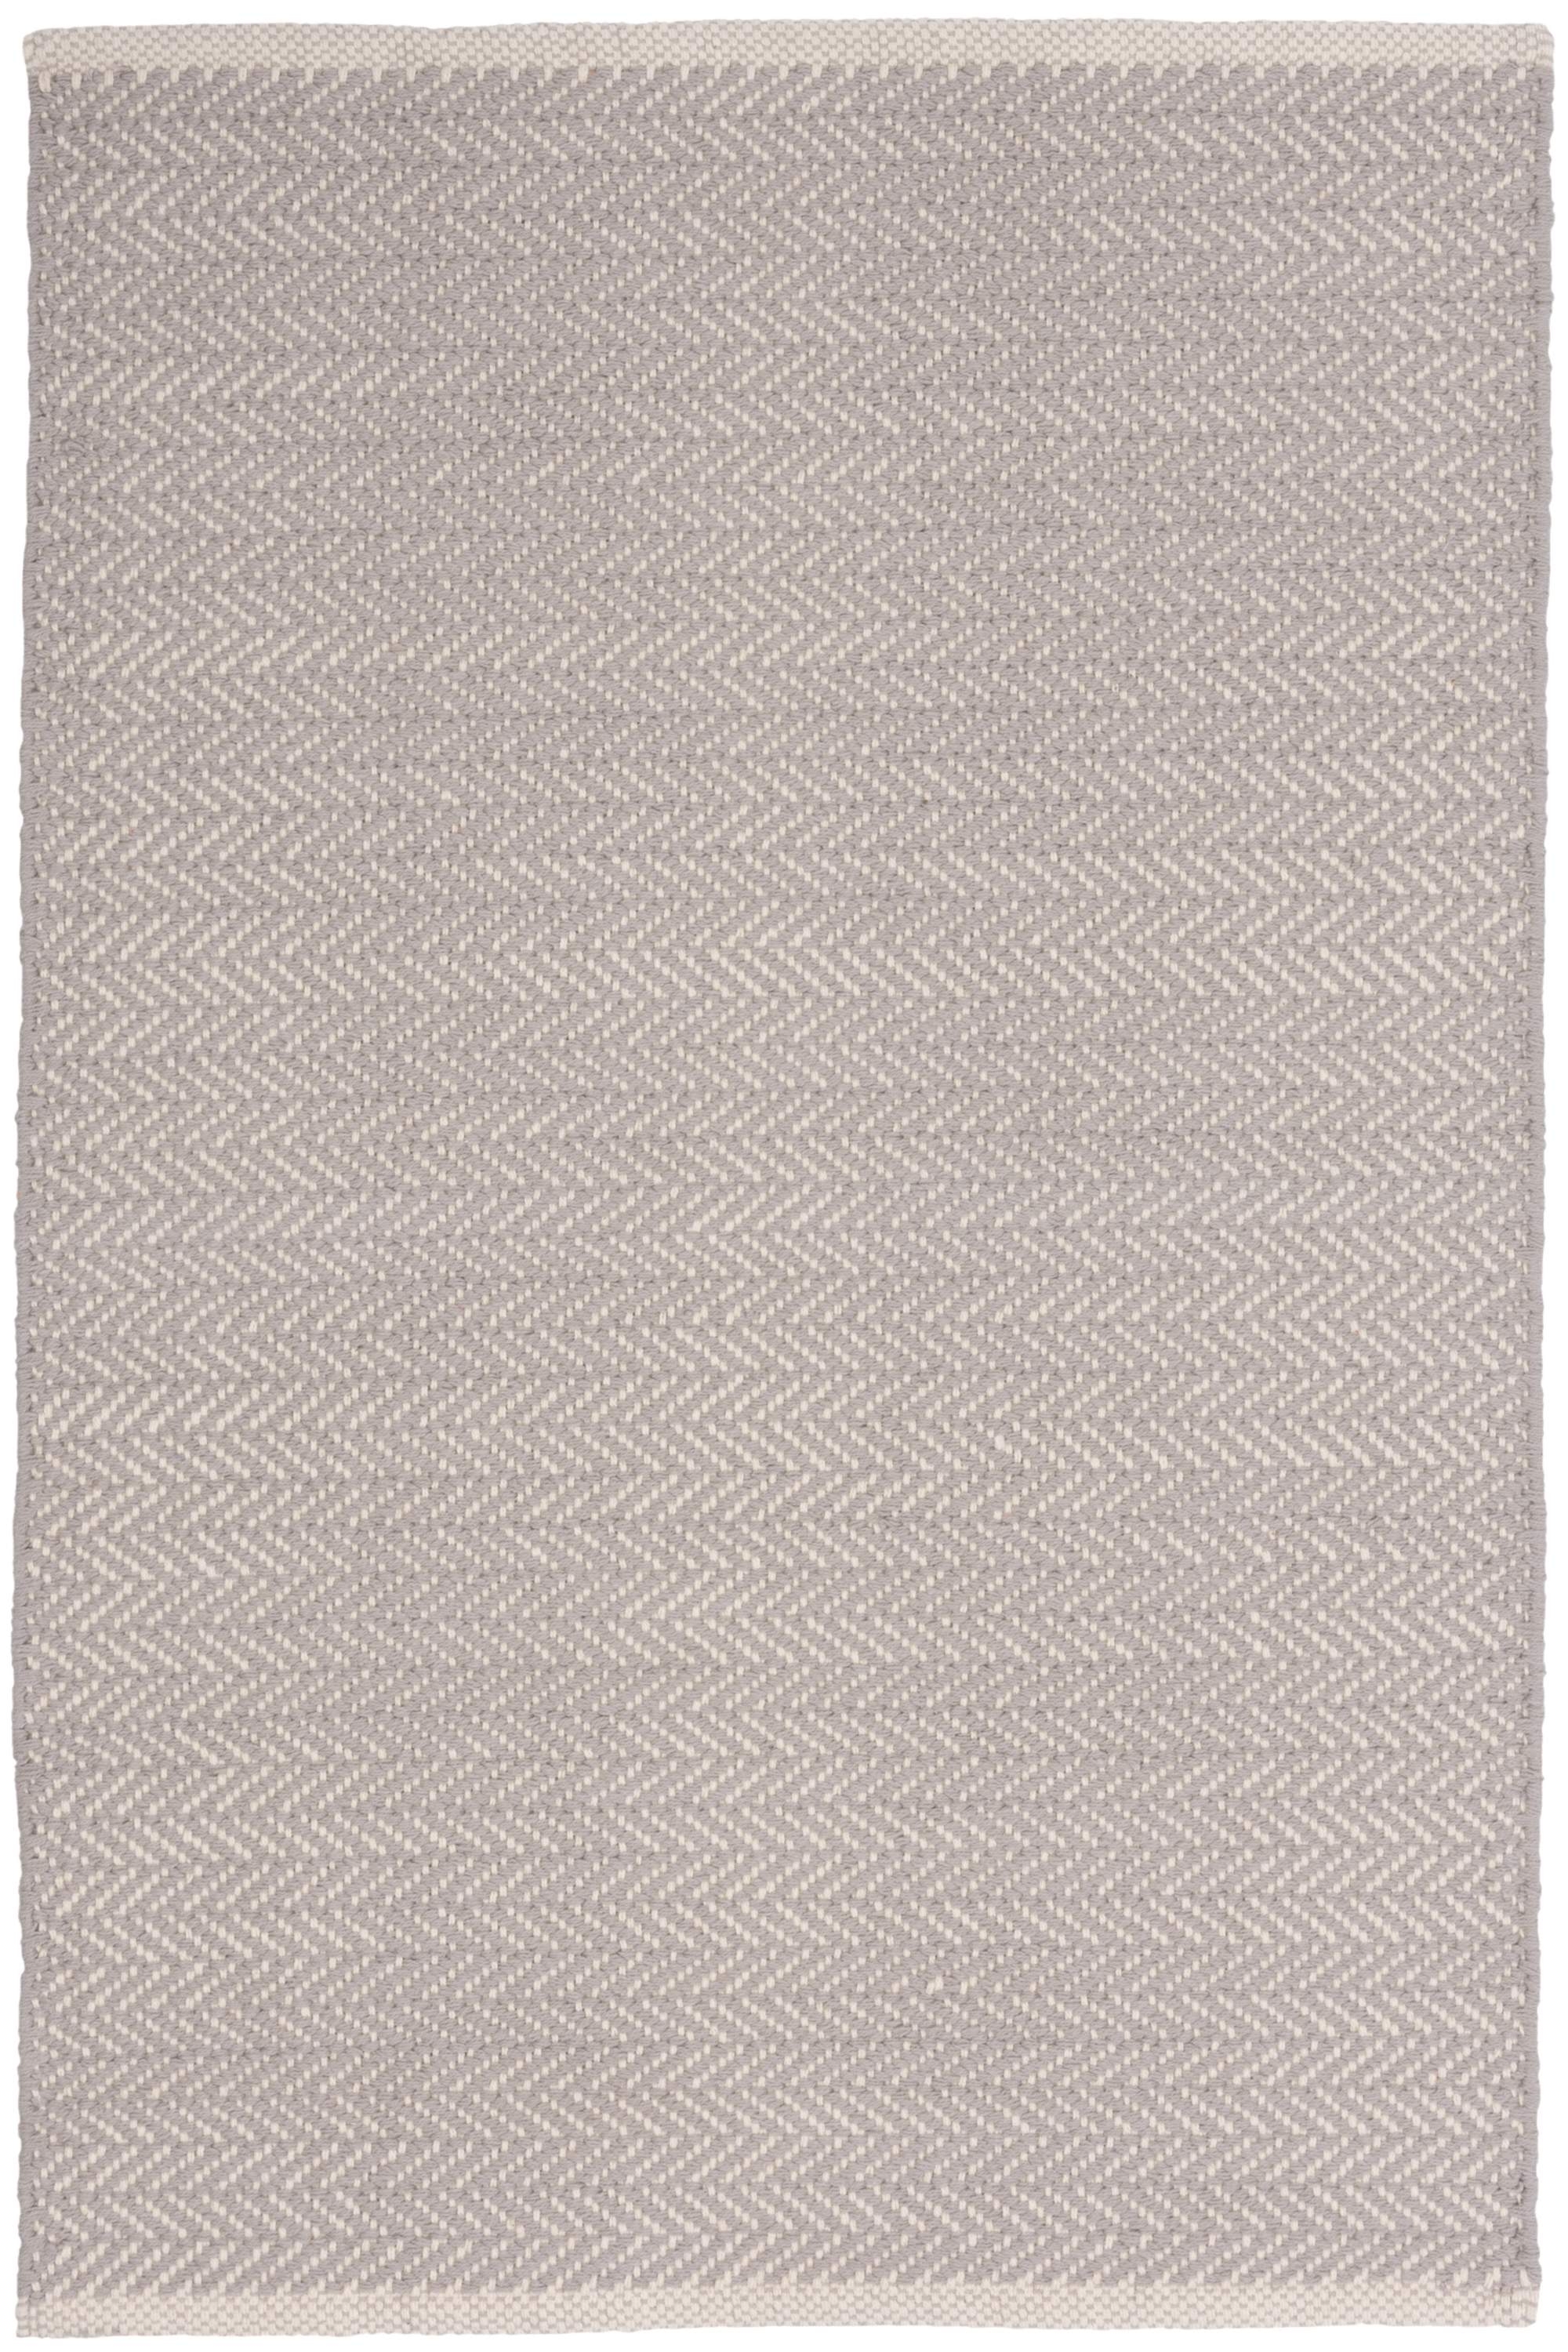 HERRINGBONE DOVE GREY WOVEN COTTON RUG - 8' x 10' - Image 0